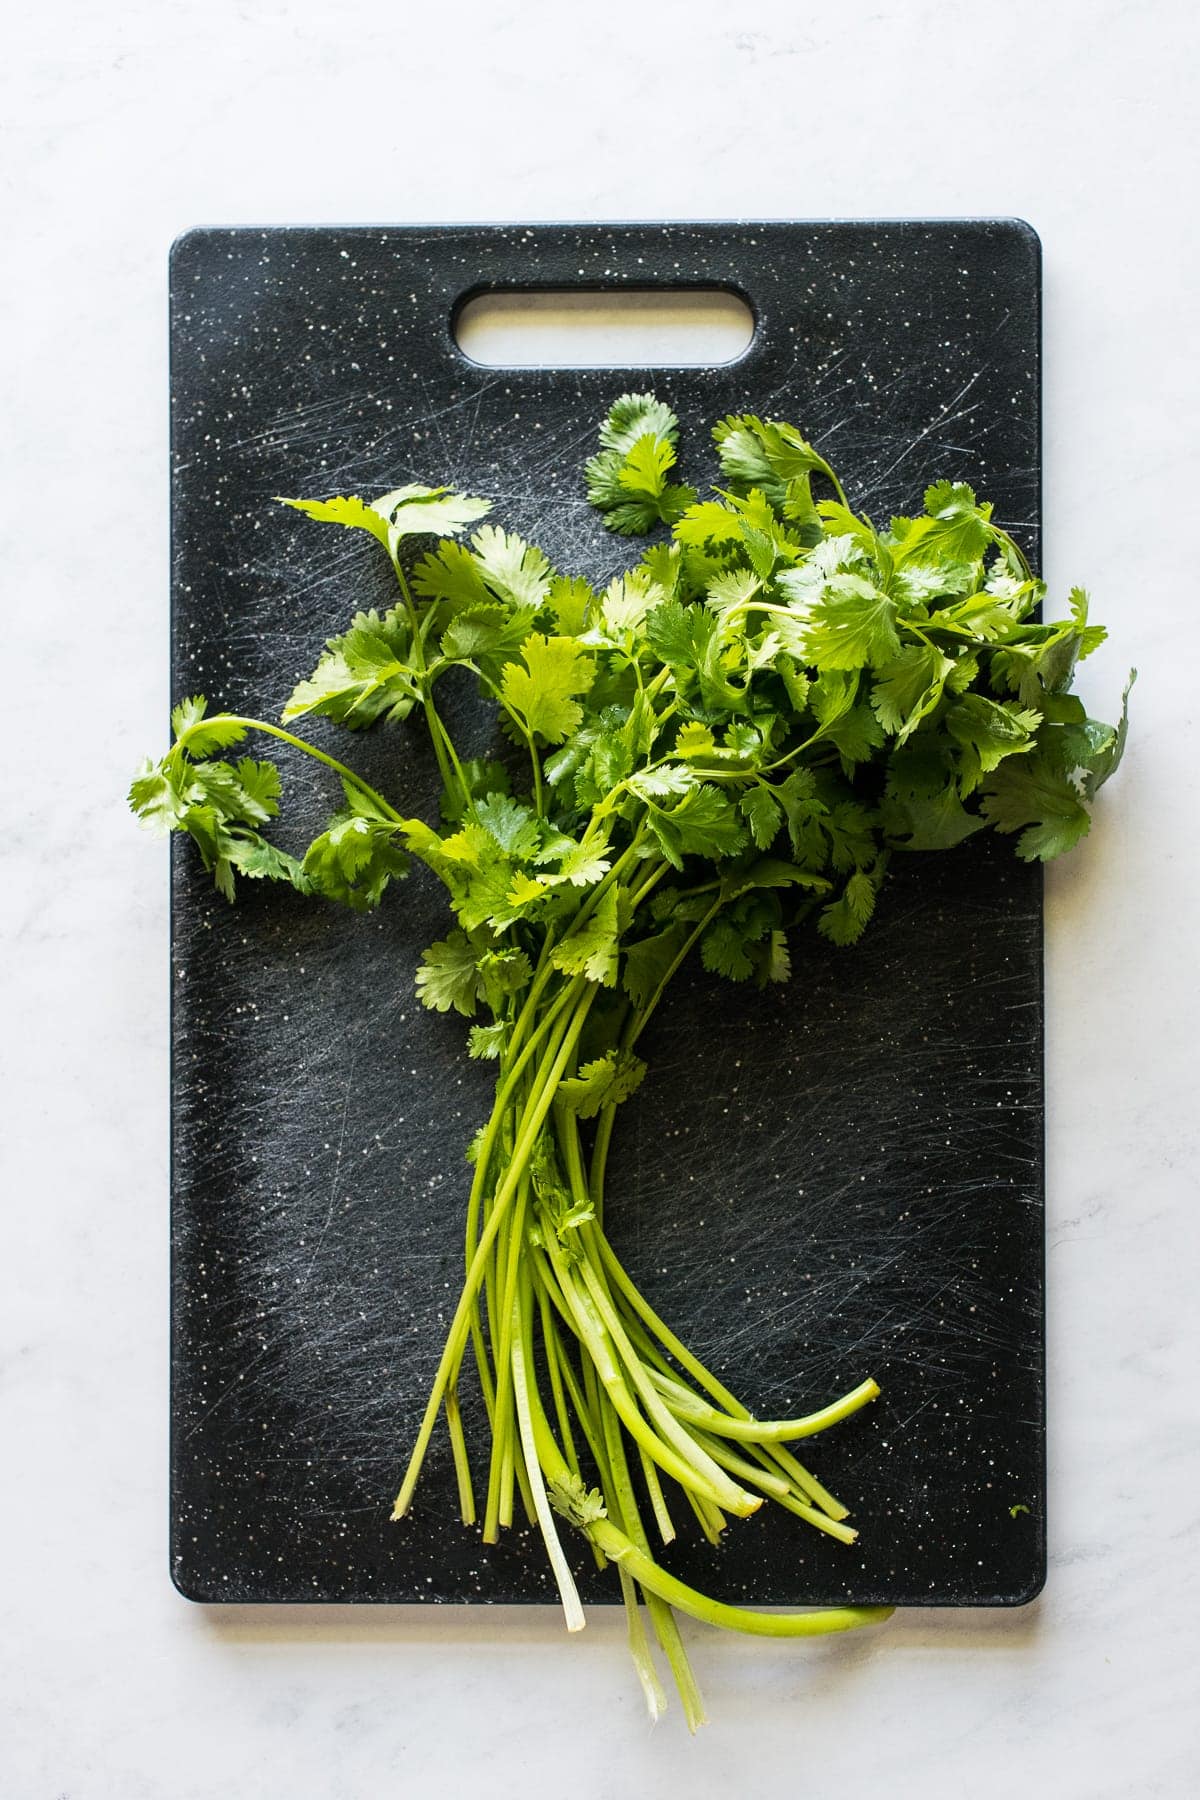 An entire bunch of cilantro on a cutting board.